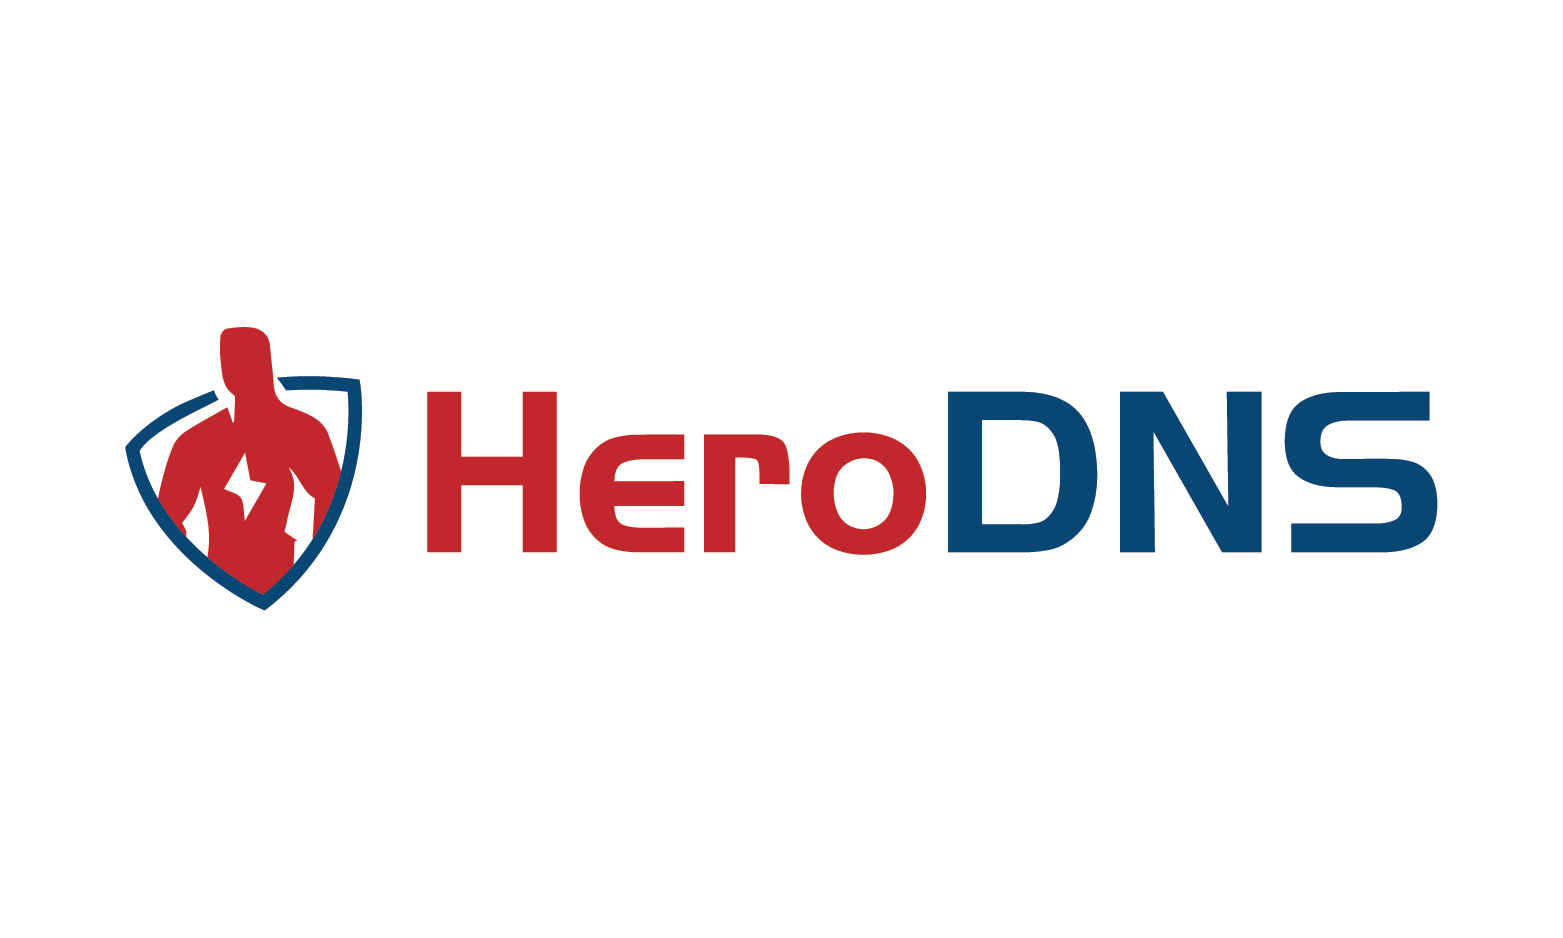 HeroDNS.com - Creative brandable domain for sale